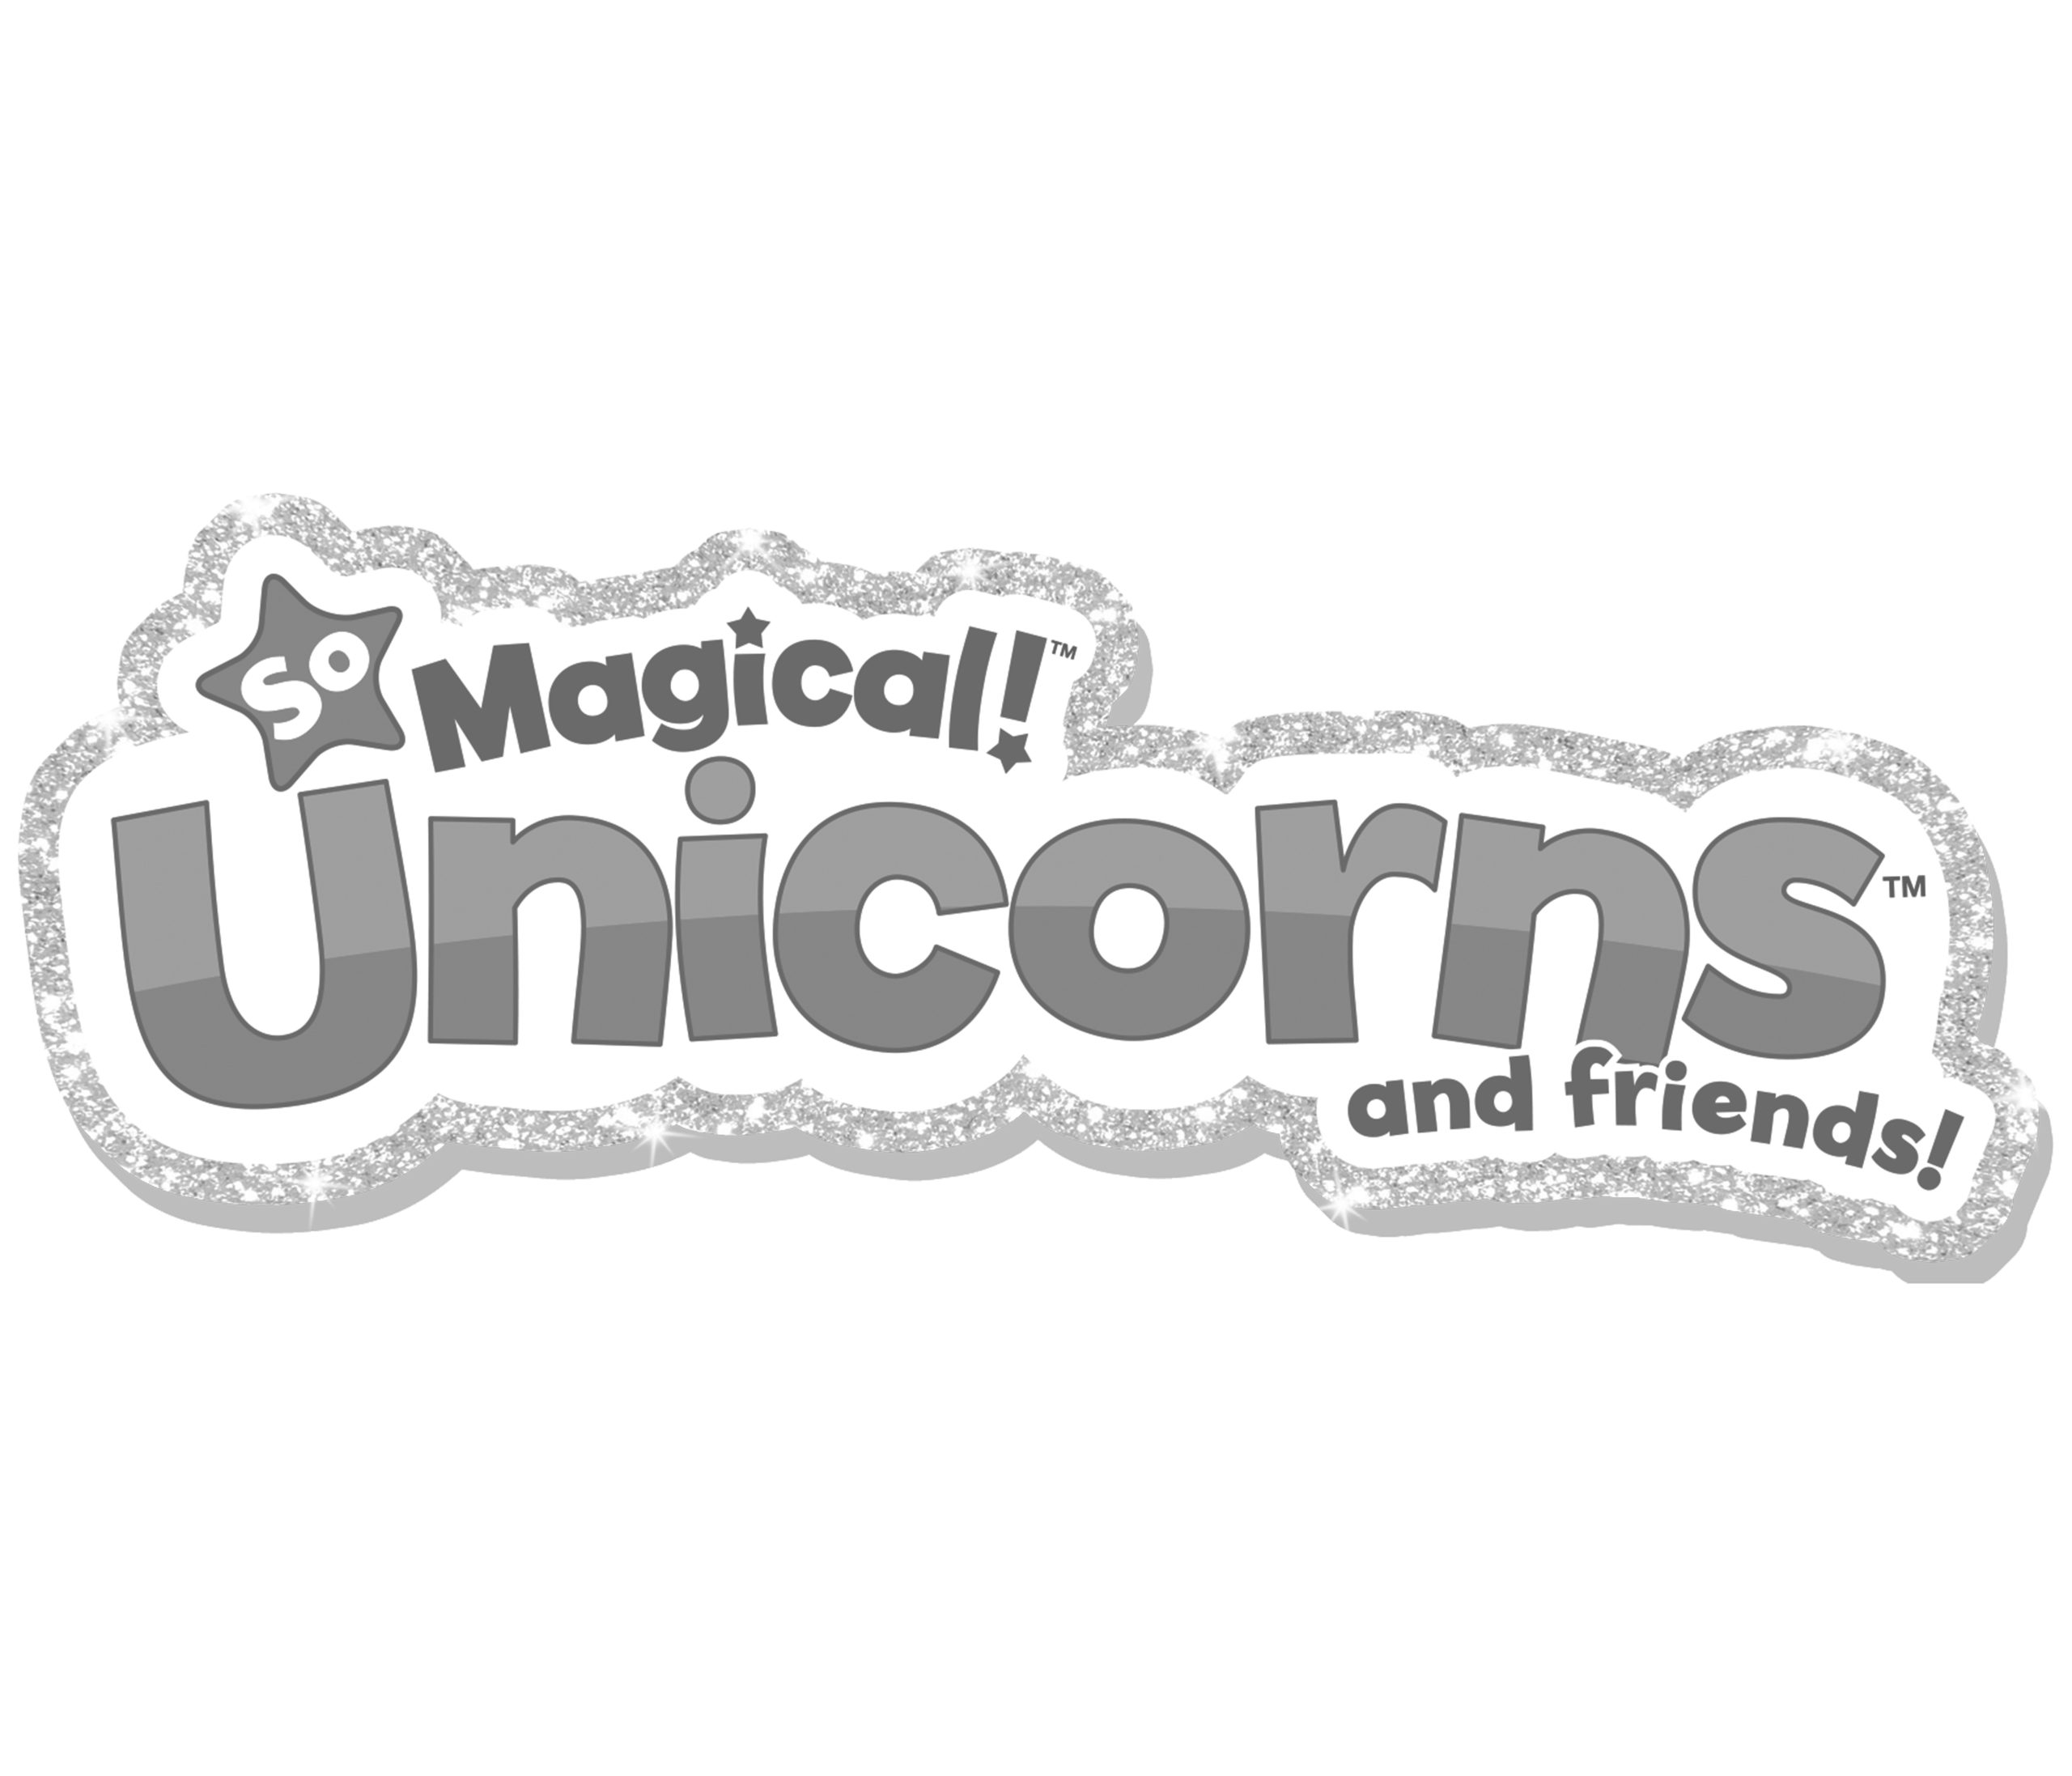 so magical unicorns